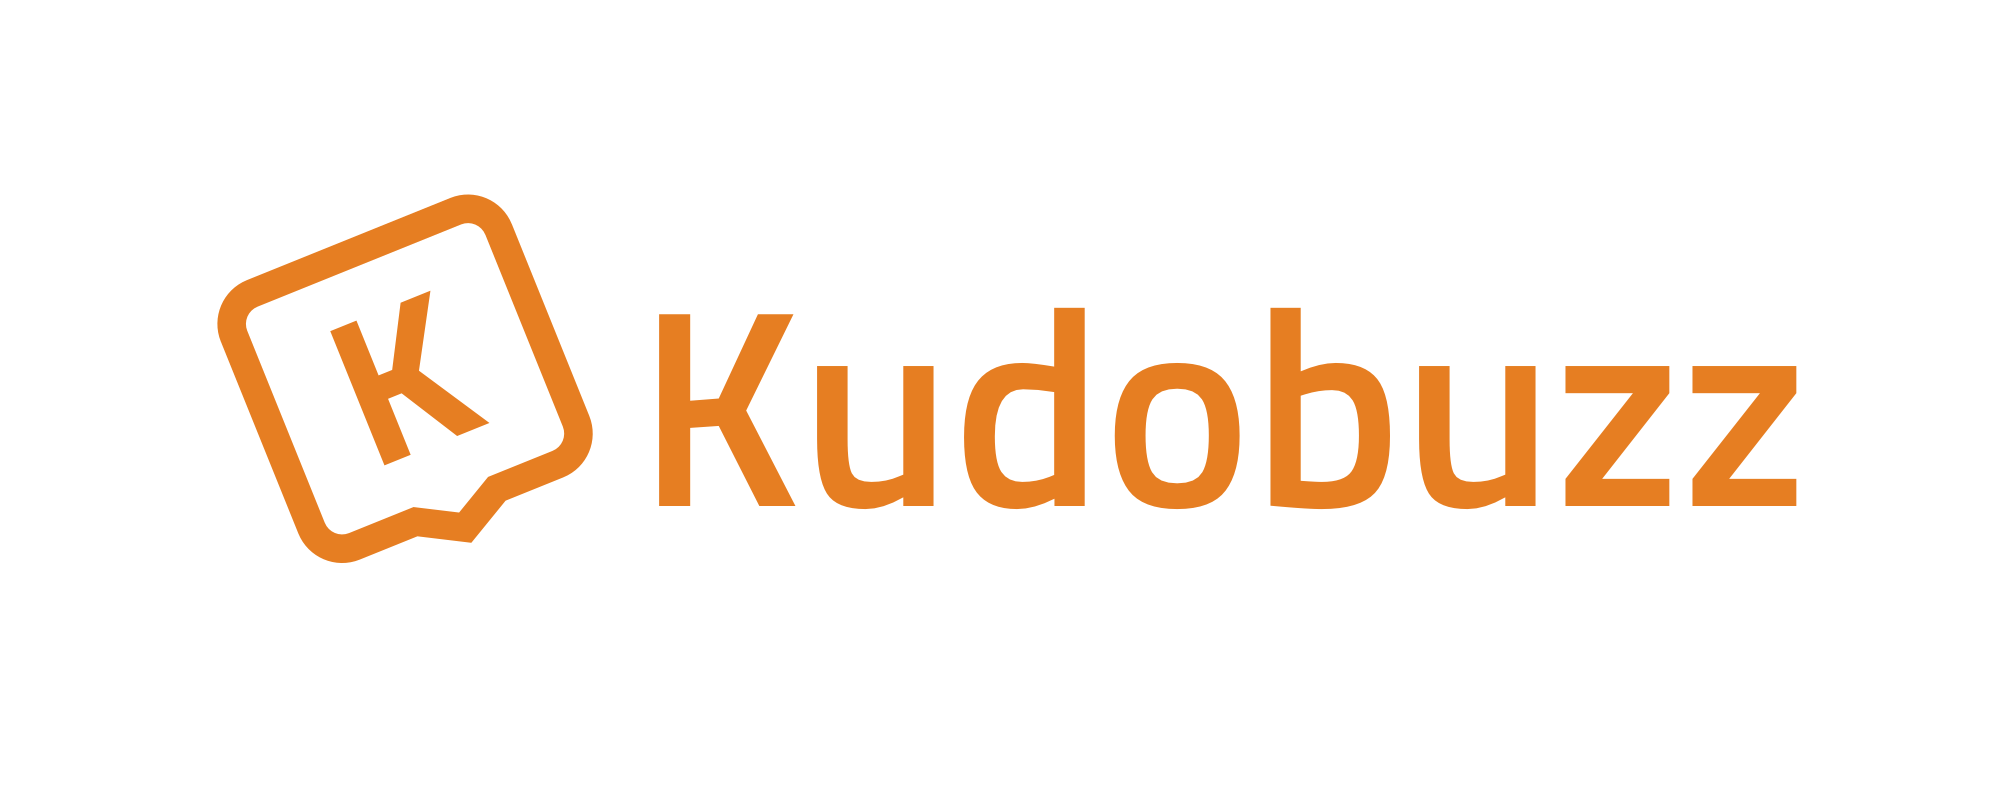 Popular Orange Logo - Kudobuzz Logo Orange Text